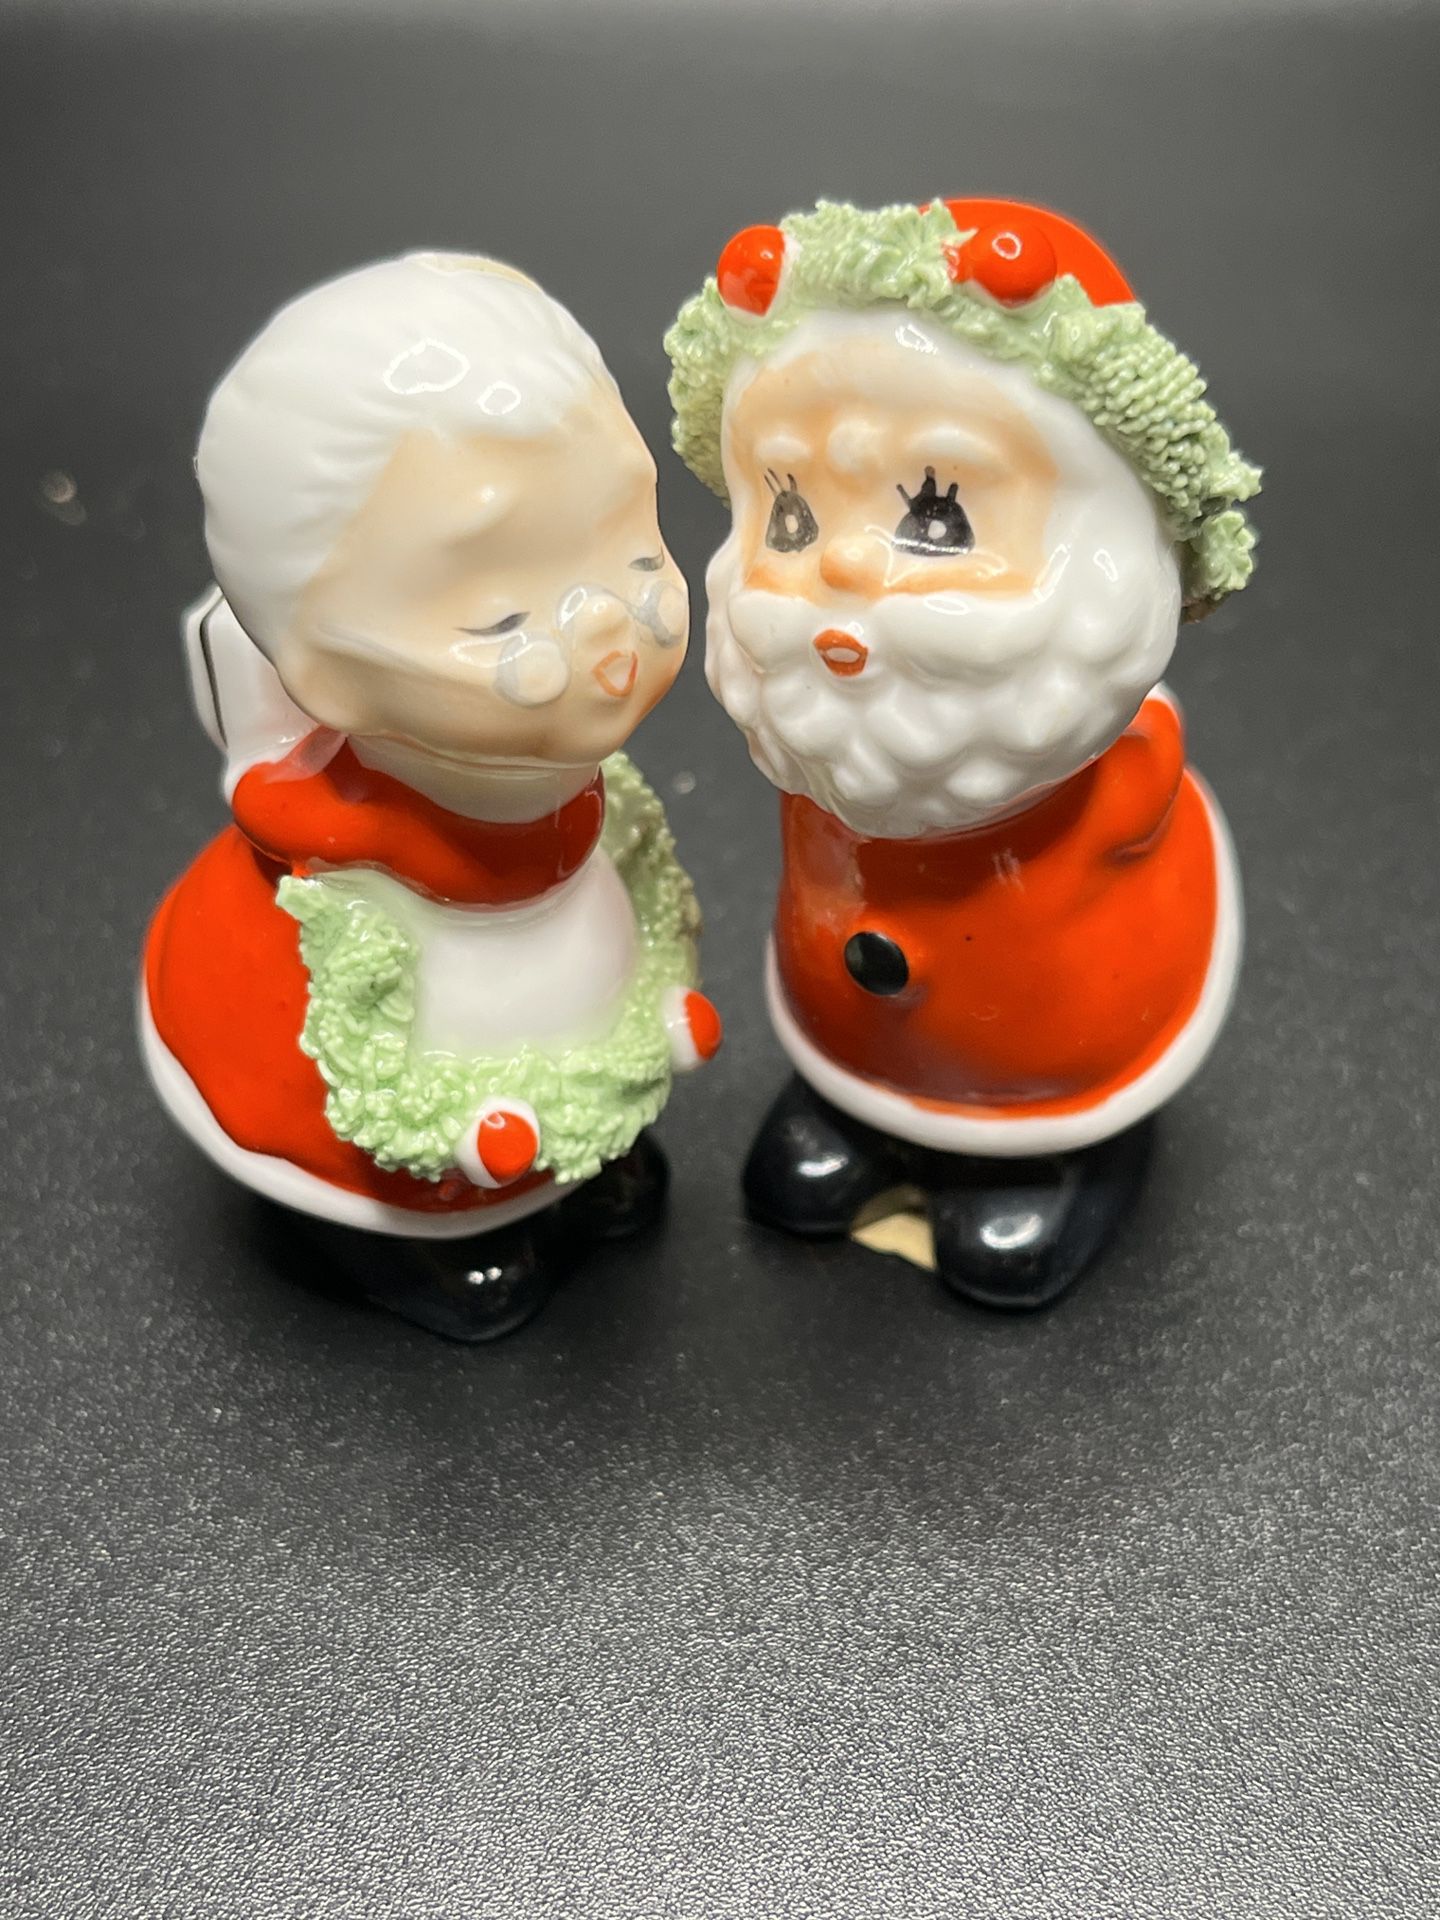 Vintage Napco Napcoware Kissing Christmas Santa & Mrs. Claus Spaghetti Trim